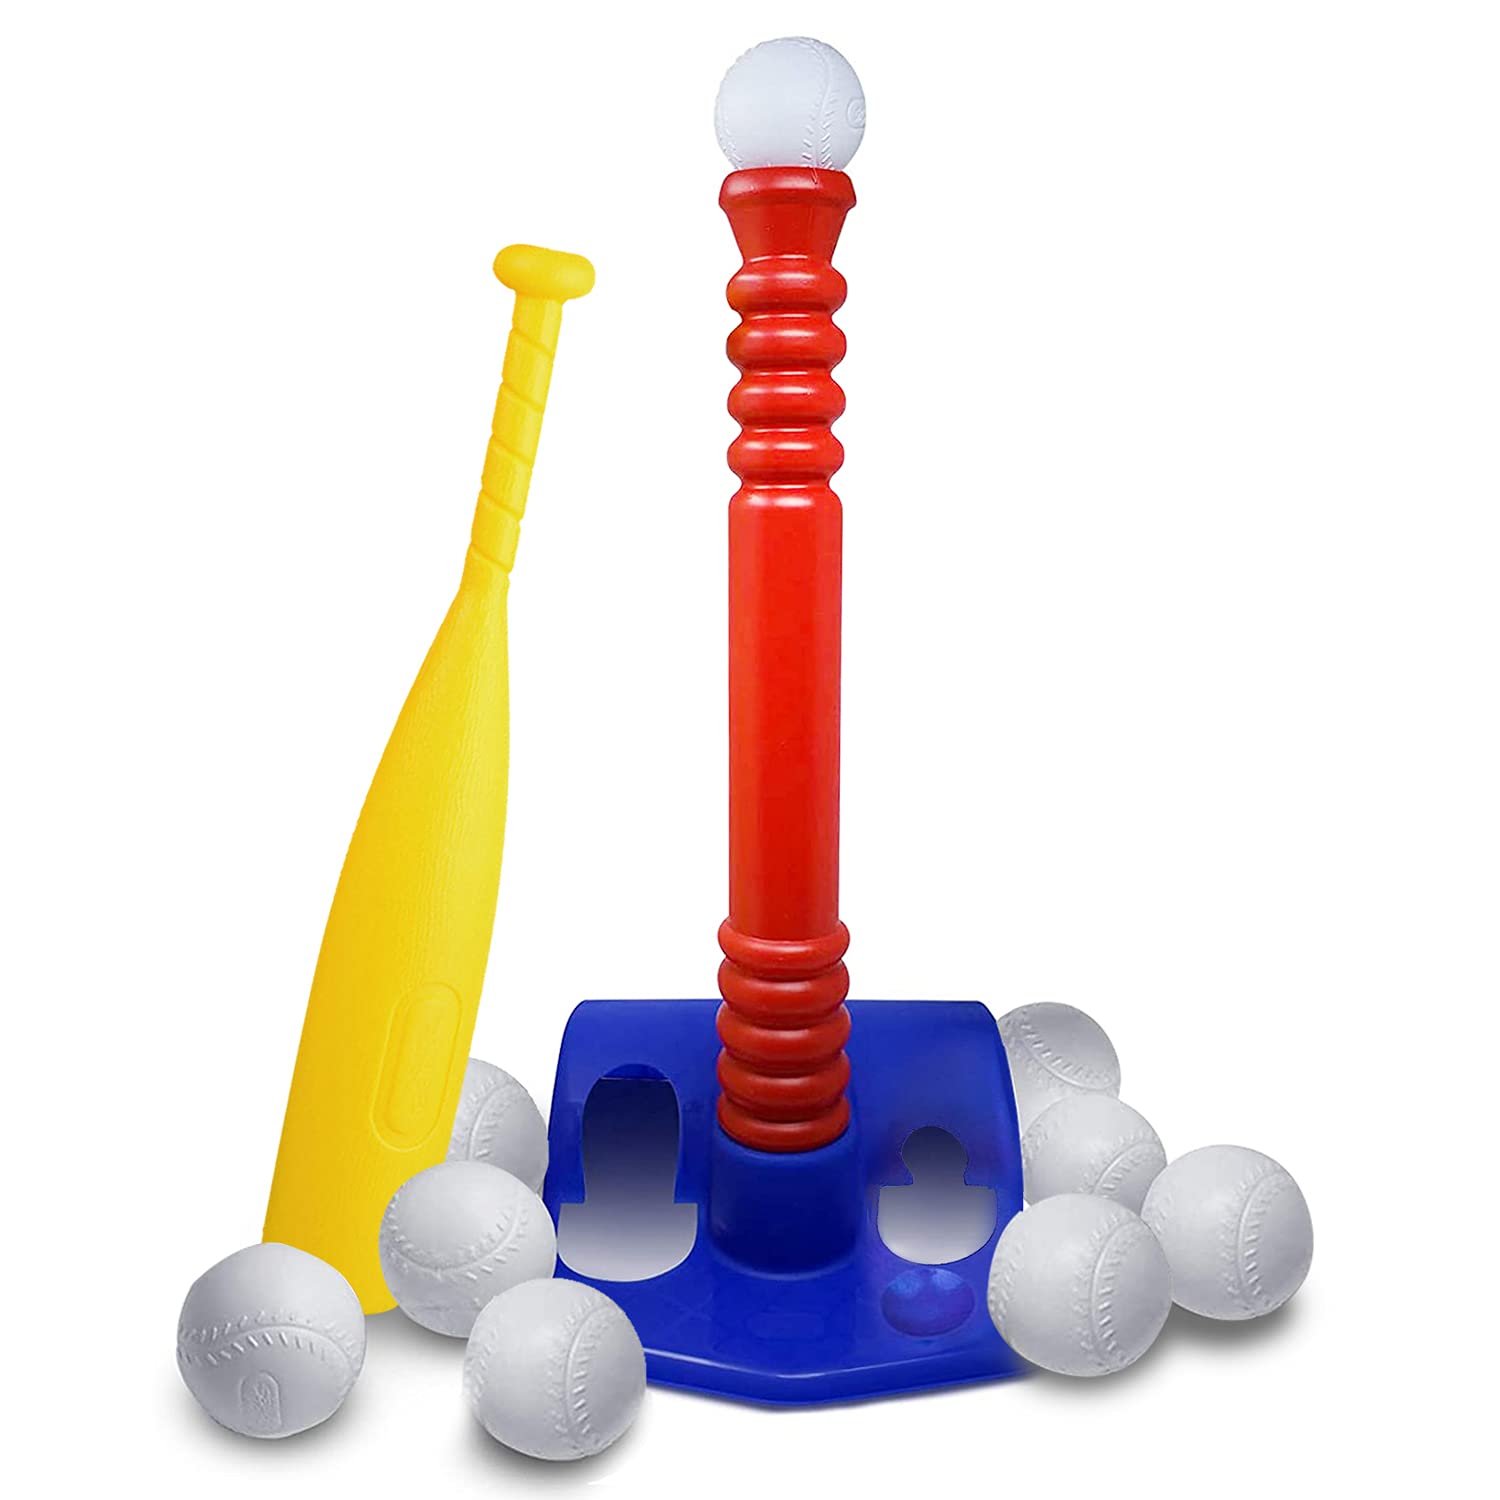 ToyVelt TBall Set For Toddlers 9 Balls - Kids Baseball Tee Game For Boys & Girls Ages 1- 10 Years